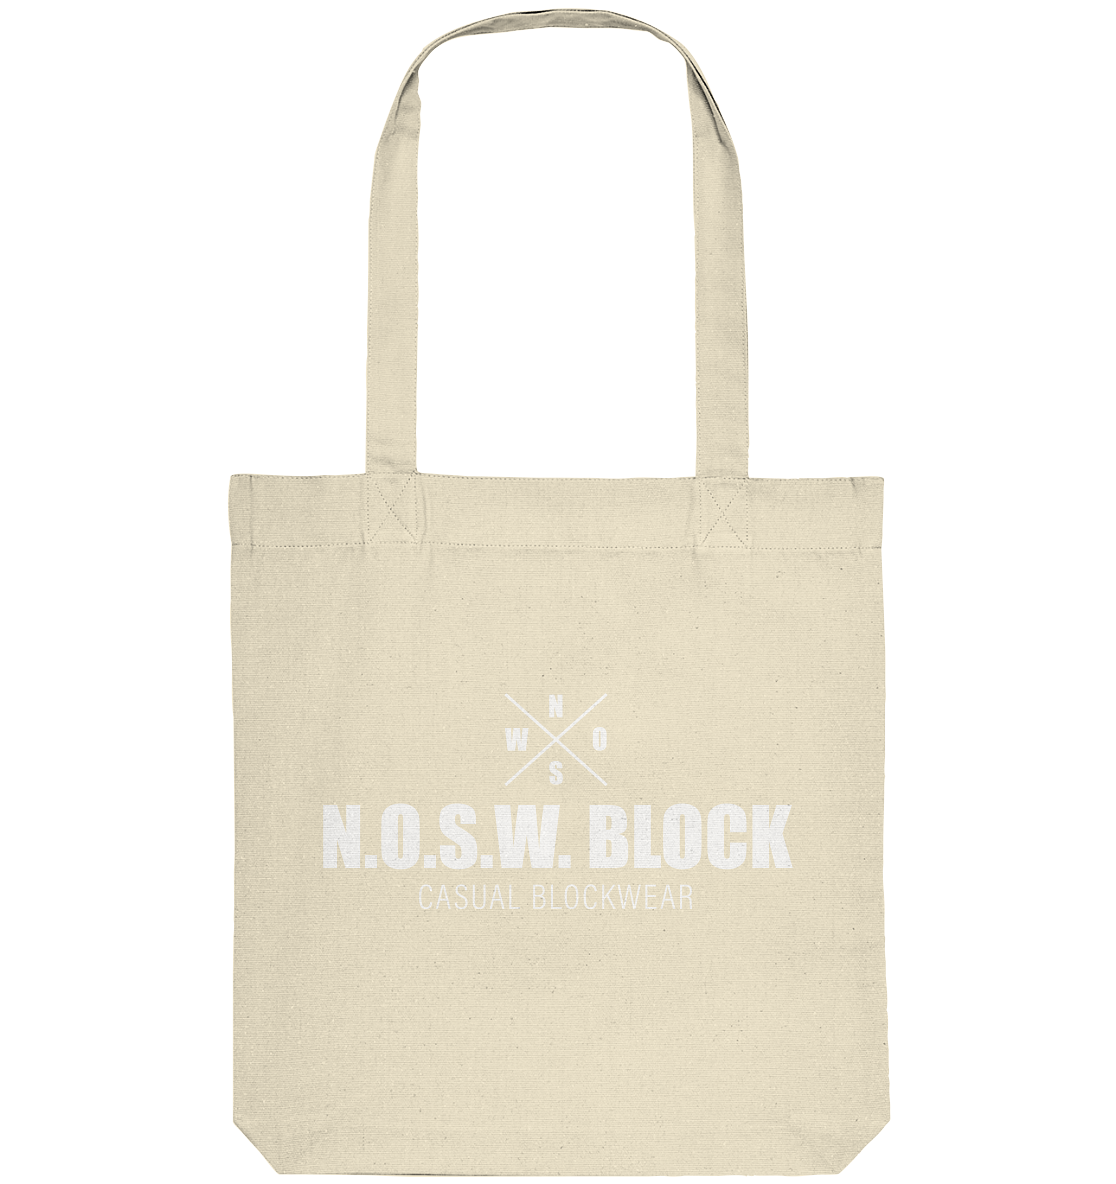 N.O.S.W. BLOCK Tote-Bag "CASUAL BLOCKWEAR" Organic Baumwolltasche natural